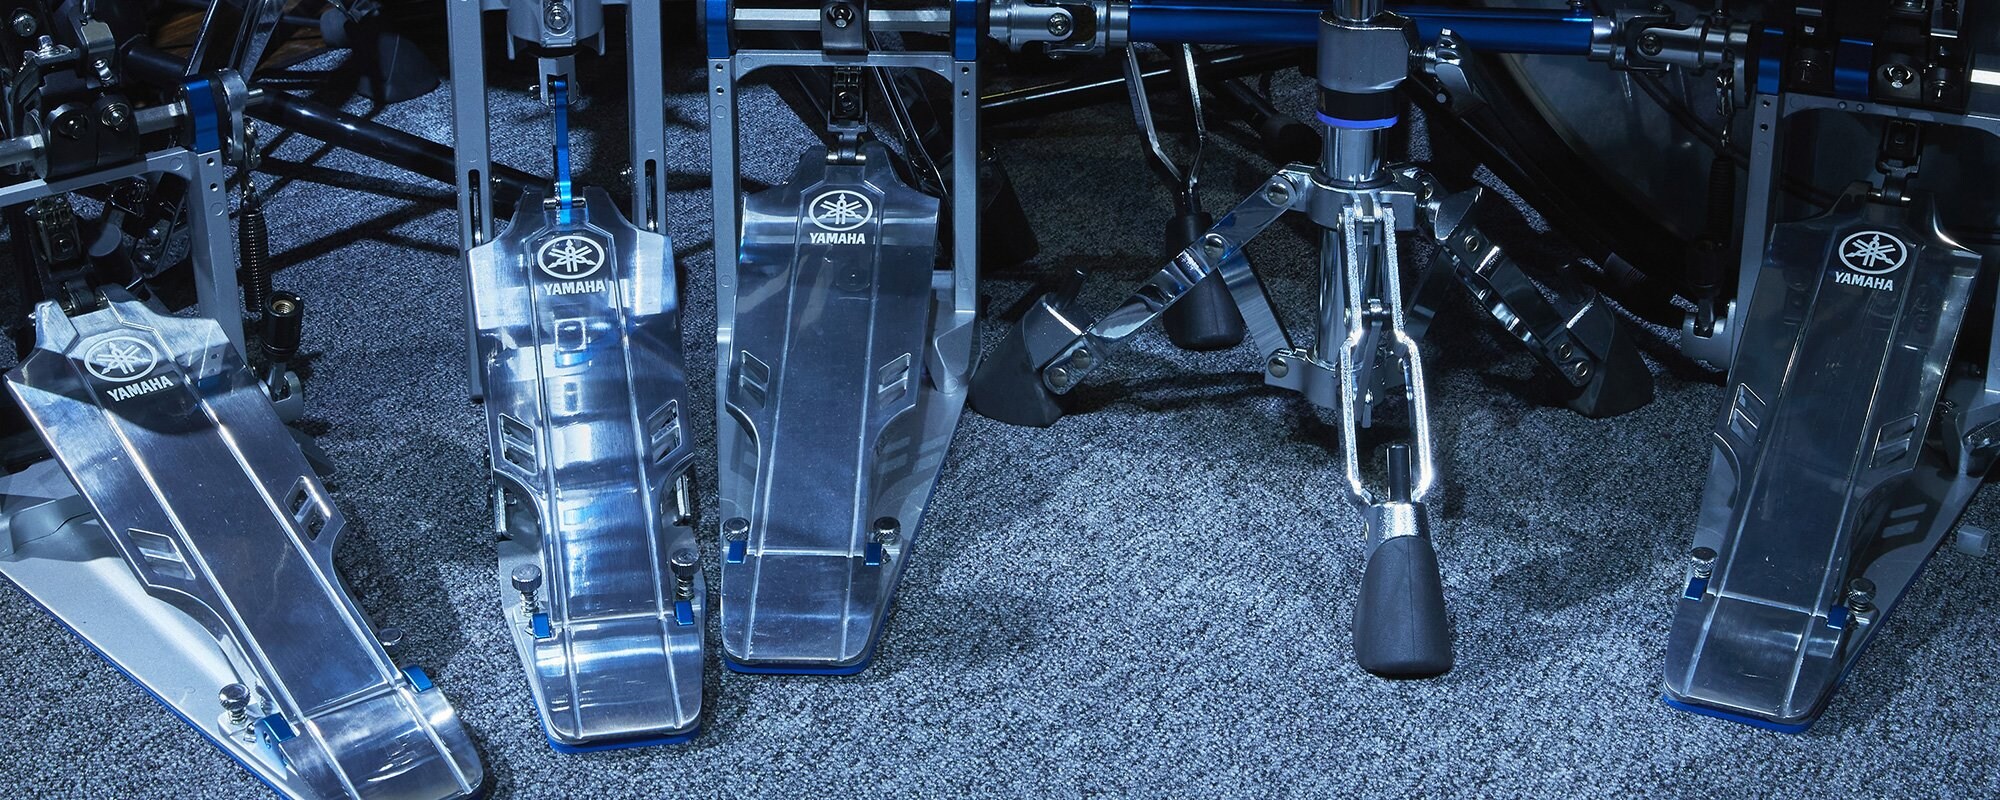 FP9 flagship foot pedal series header banner